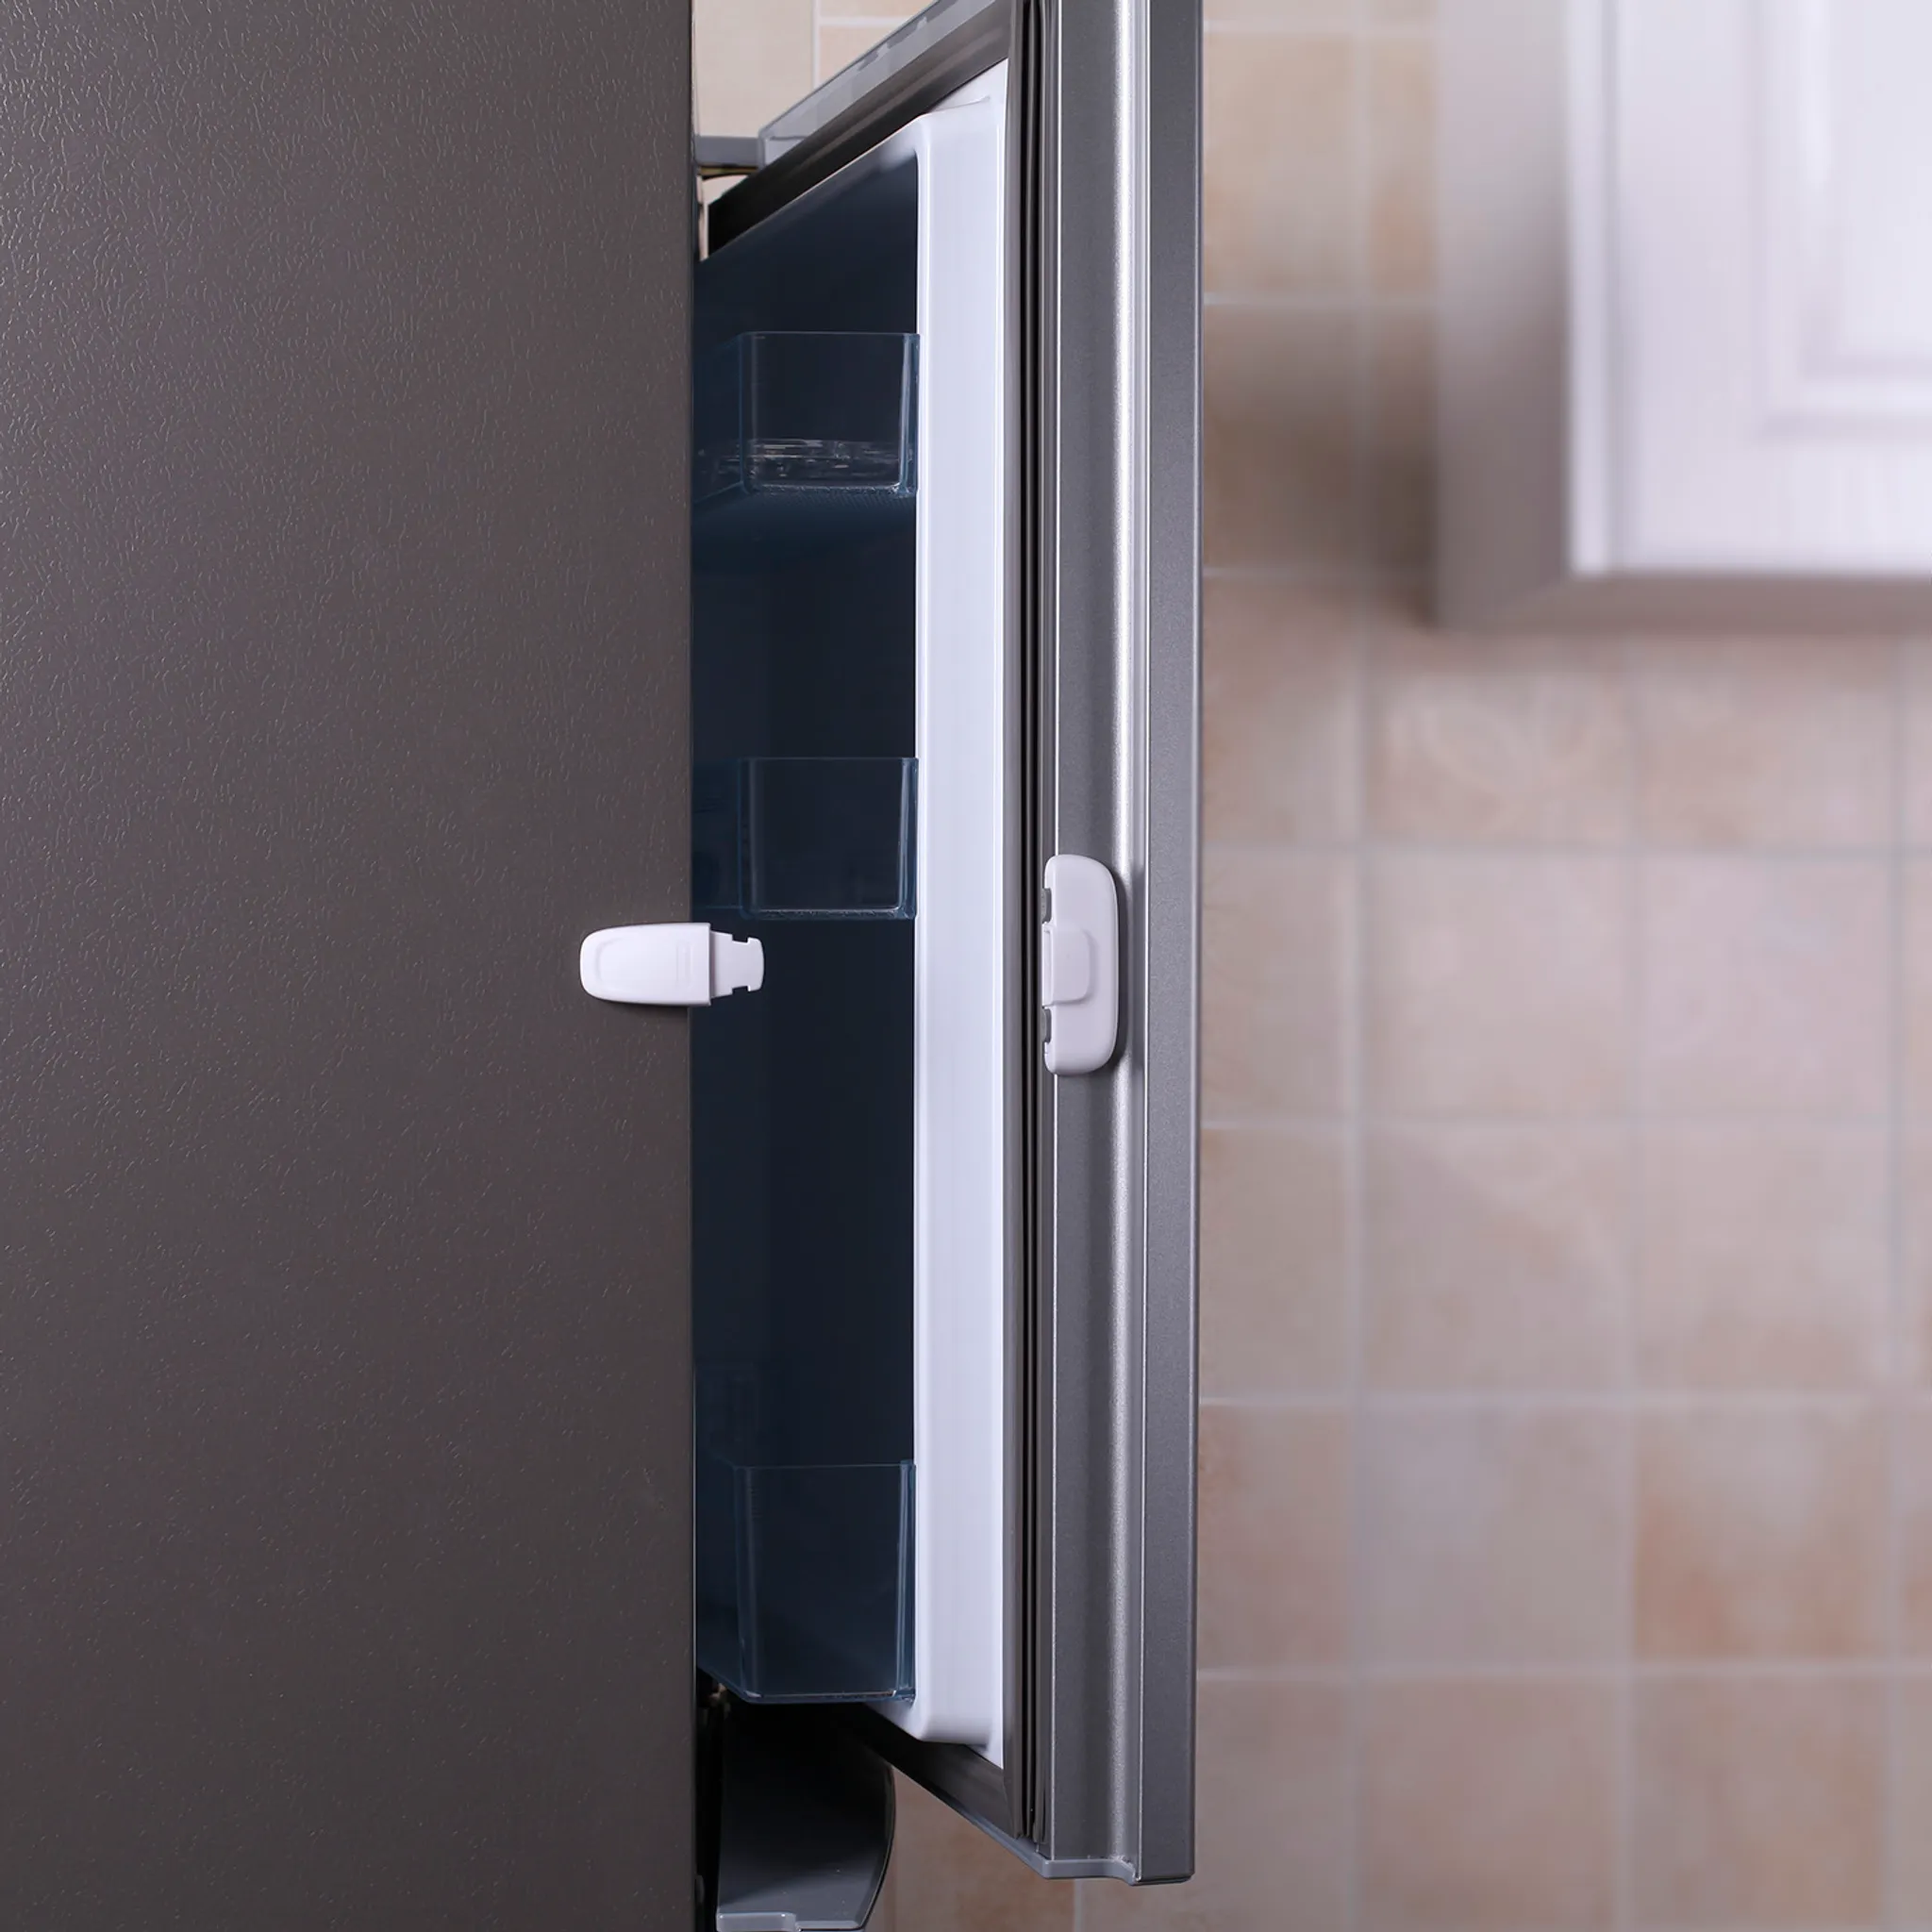 Büro LiNKFOR 2 stück Kindersicherung mit Schlüssel Schrank Kühlschrankschloss Kühlschranktür Kühlschrank Schloss bschließbares Klebeschloss Fenstersperre Öffnungsbegrenzer für Haushalt Schwarz 